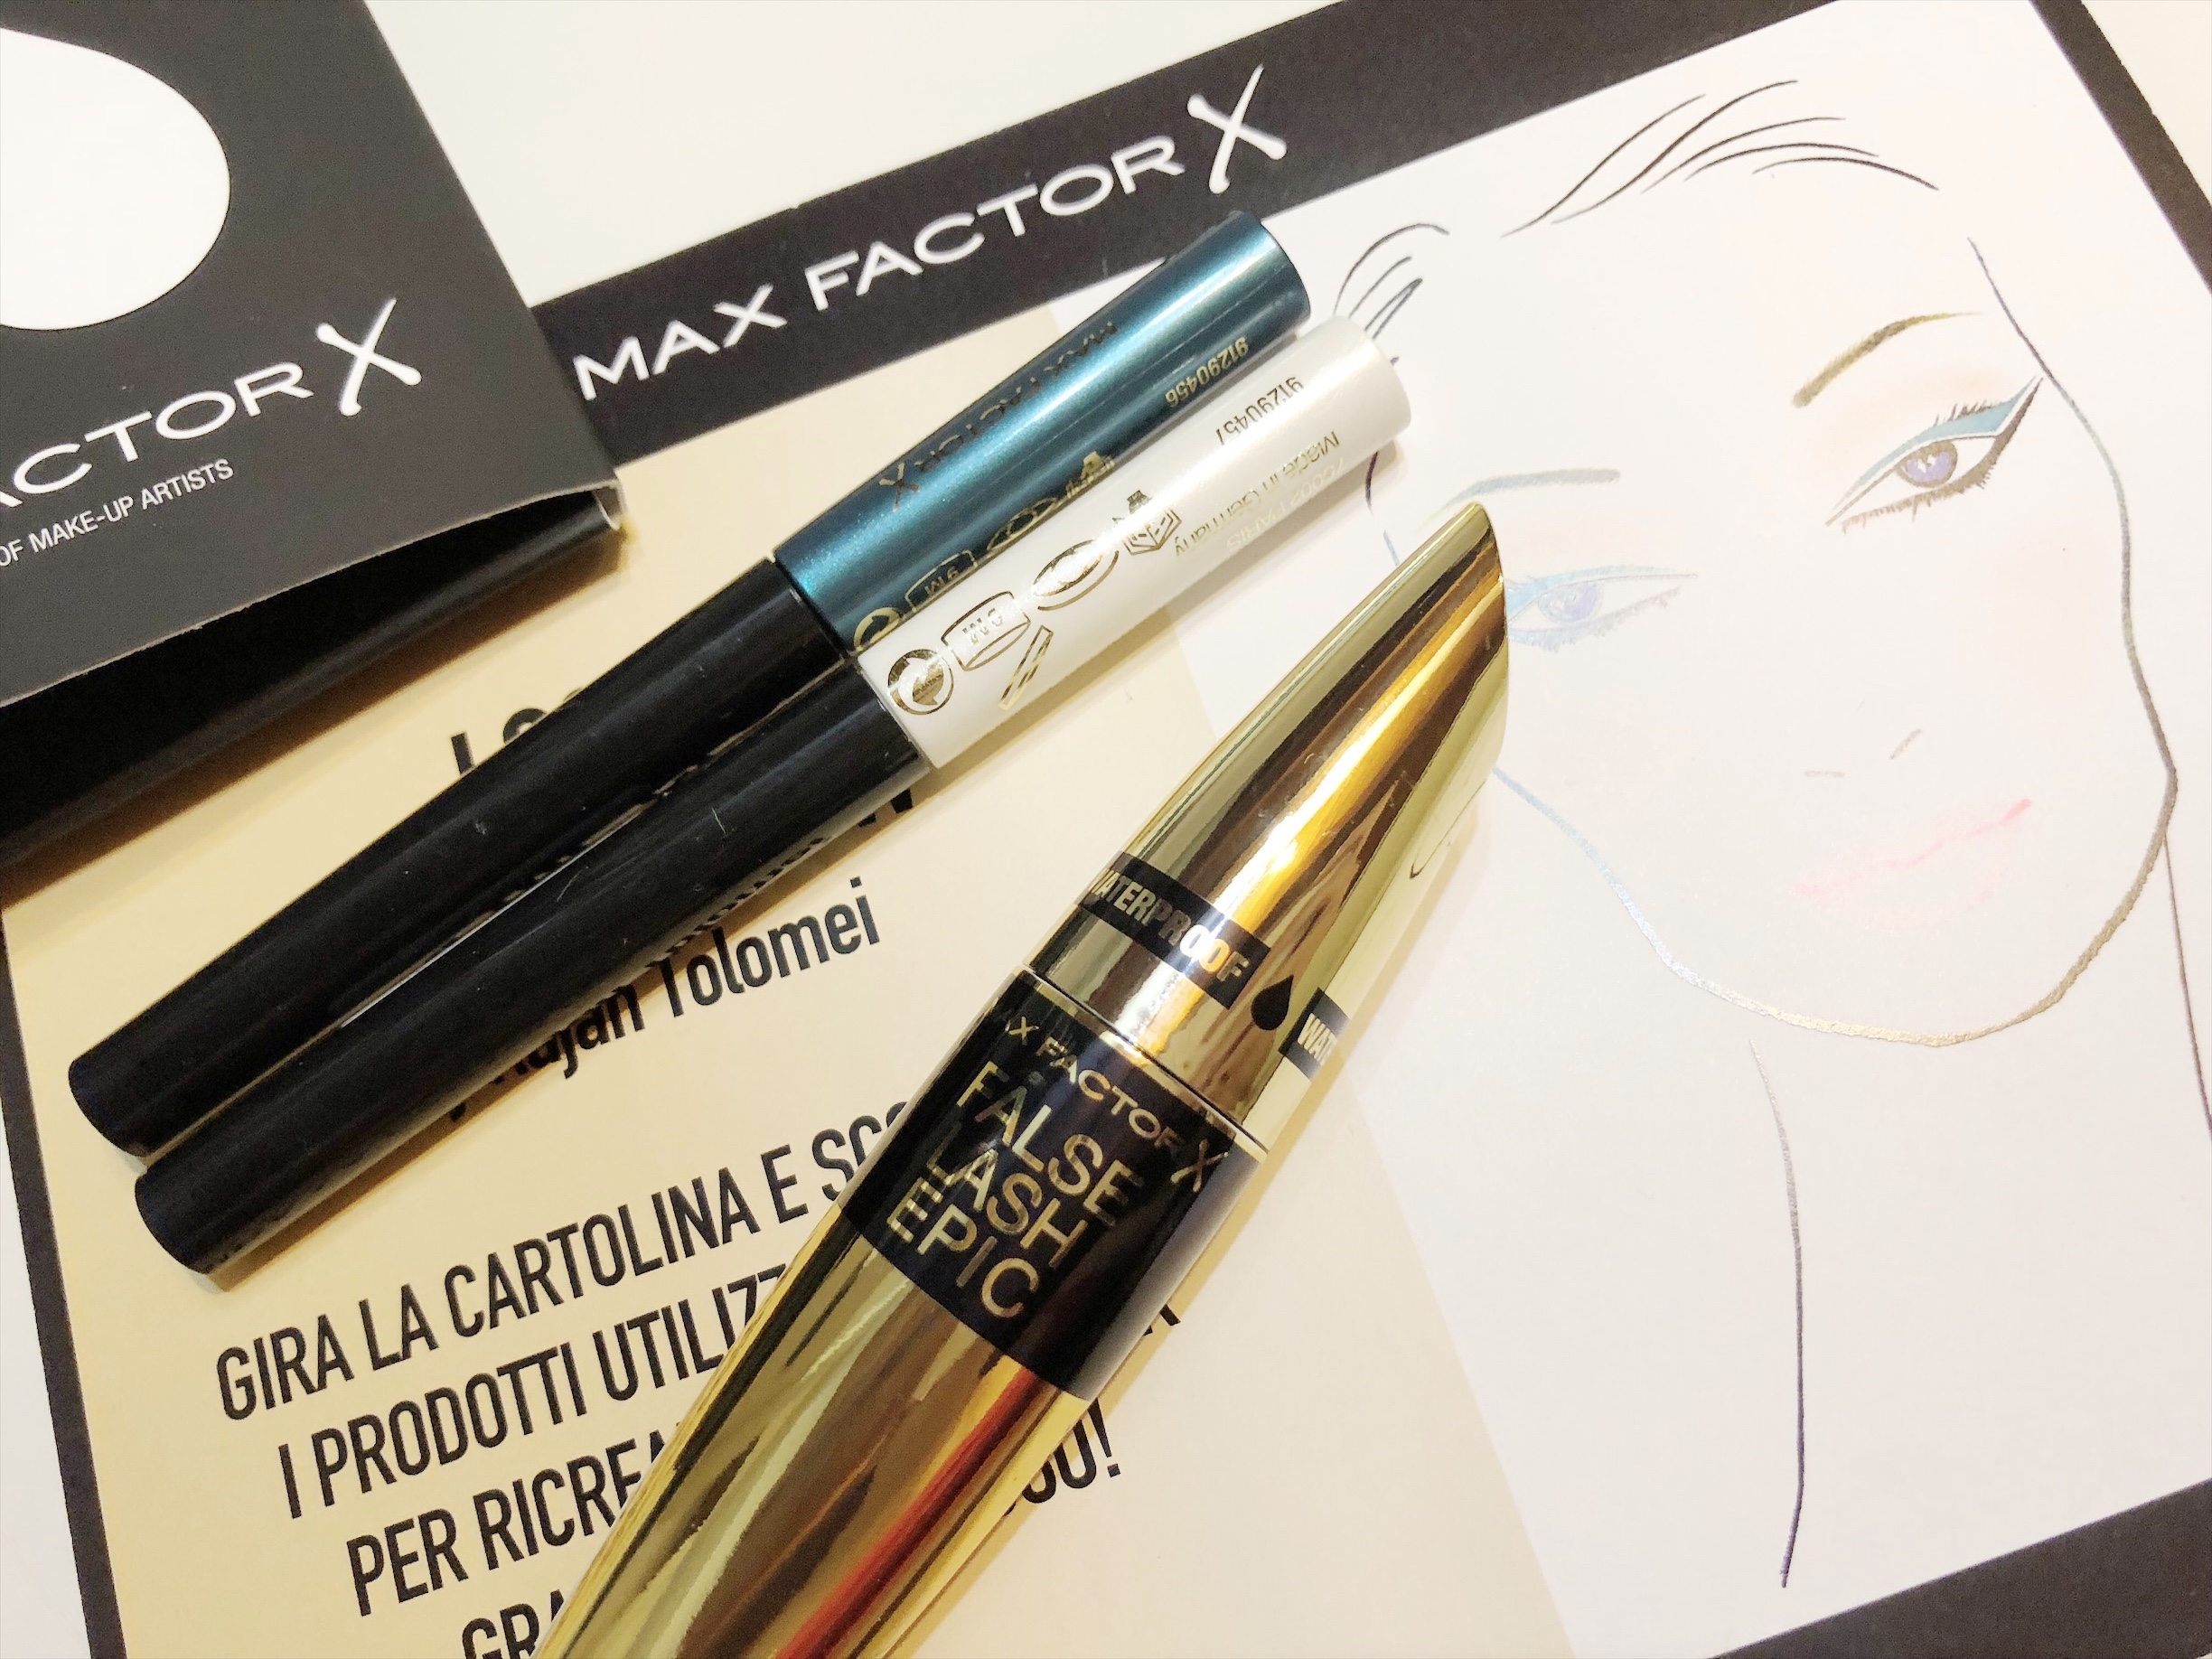 Look Graphic Glow by Rajan Tolomei, make-up esclusivo di Max FactorX